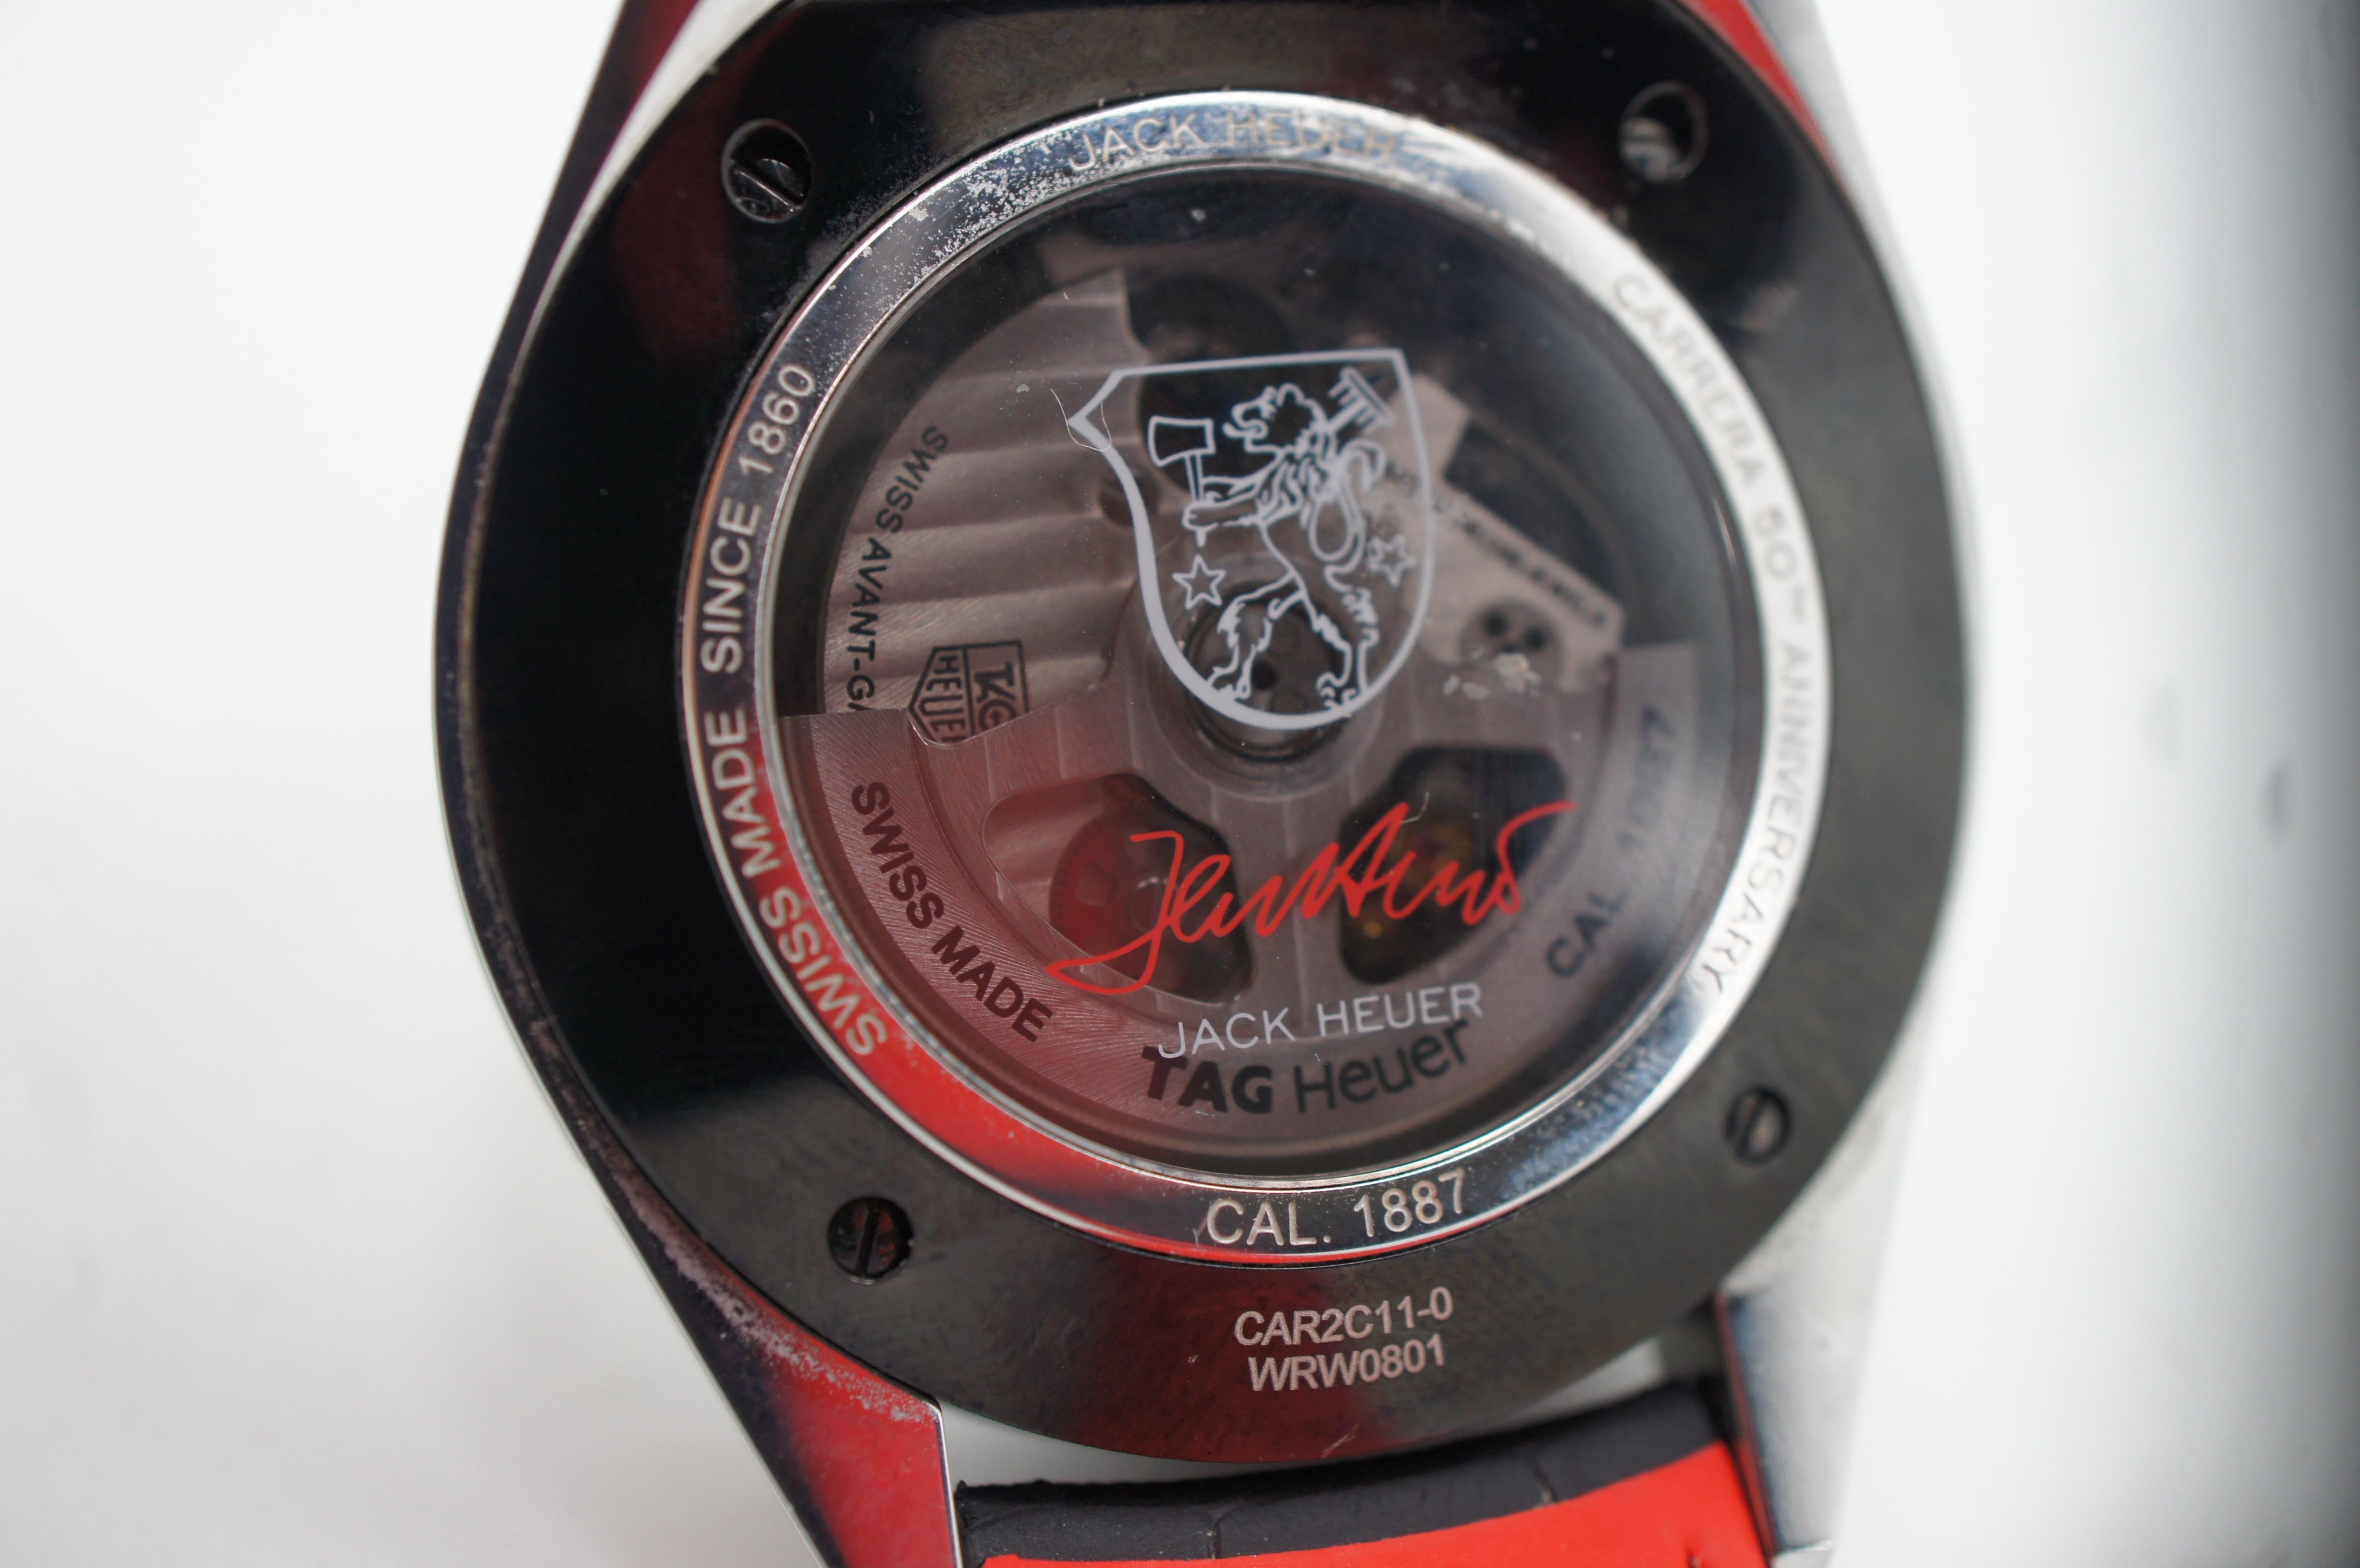 Tag Heuer Carrera 50th Anniversary 1887 Jack Heuer CAR2C11 Swiss Wrist Watch For Sale 4